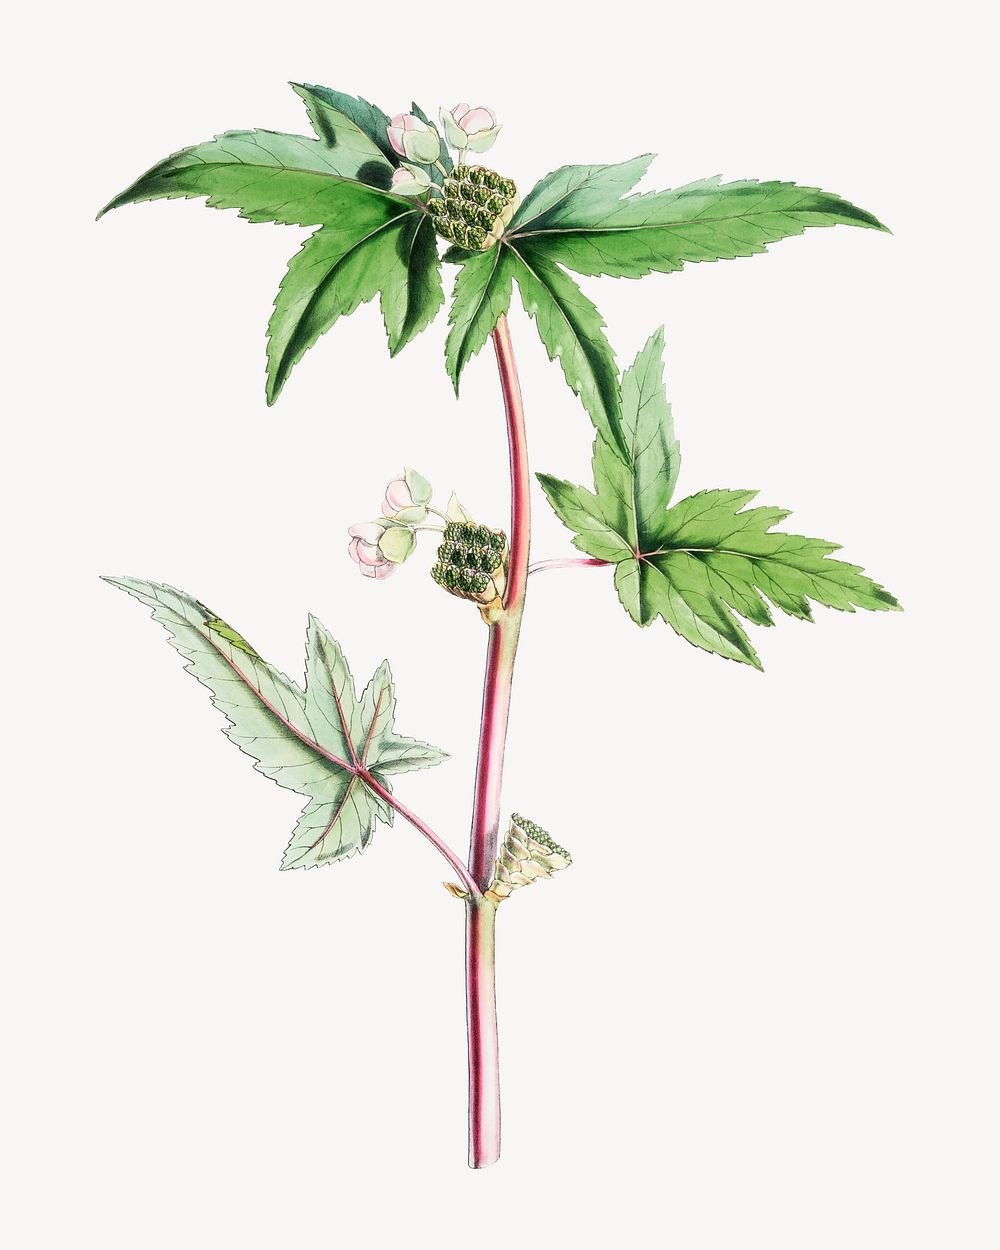 Begonia Gemmipara flower, vintage Himalayan plants illustration.  Remixed by rawpixel.